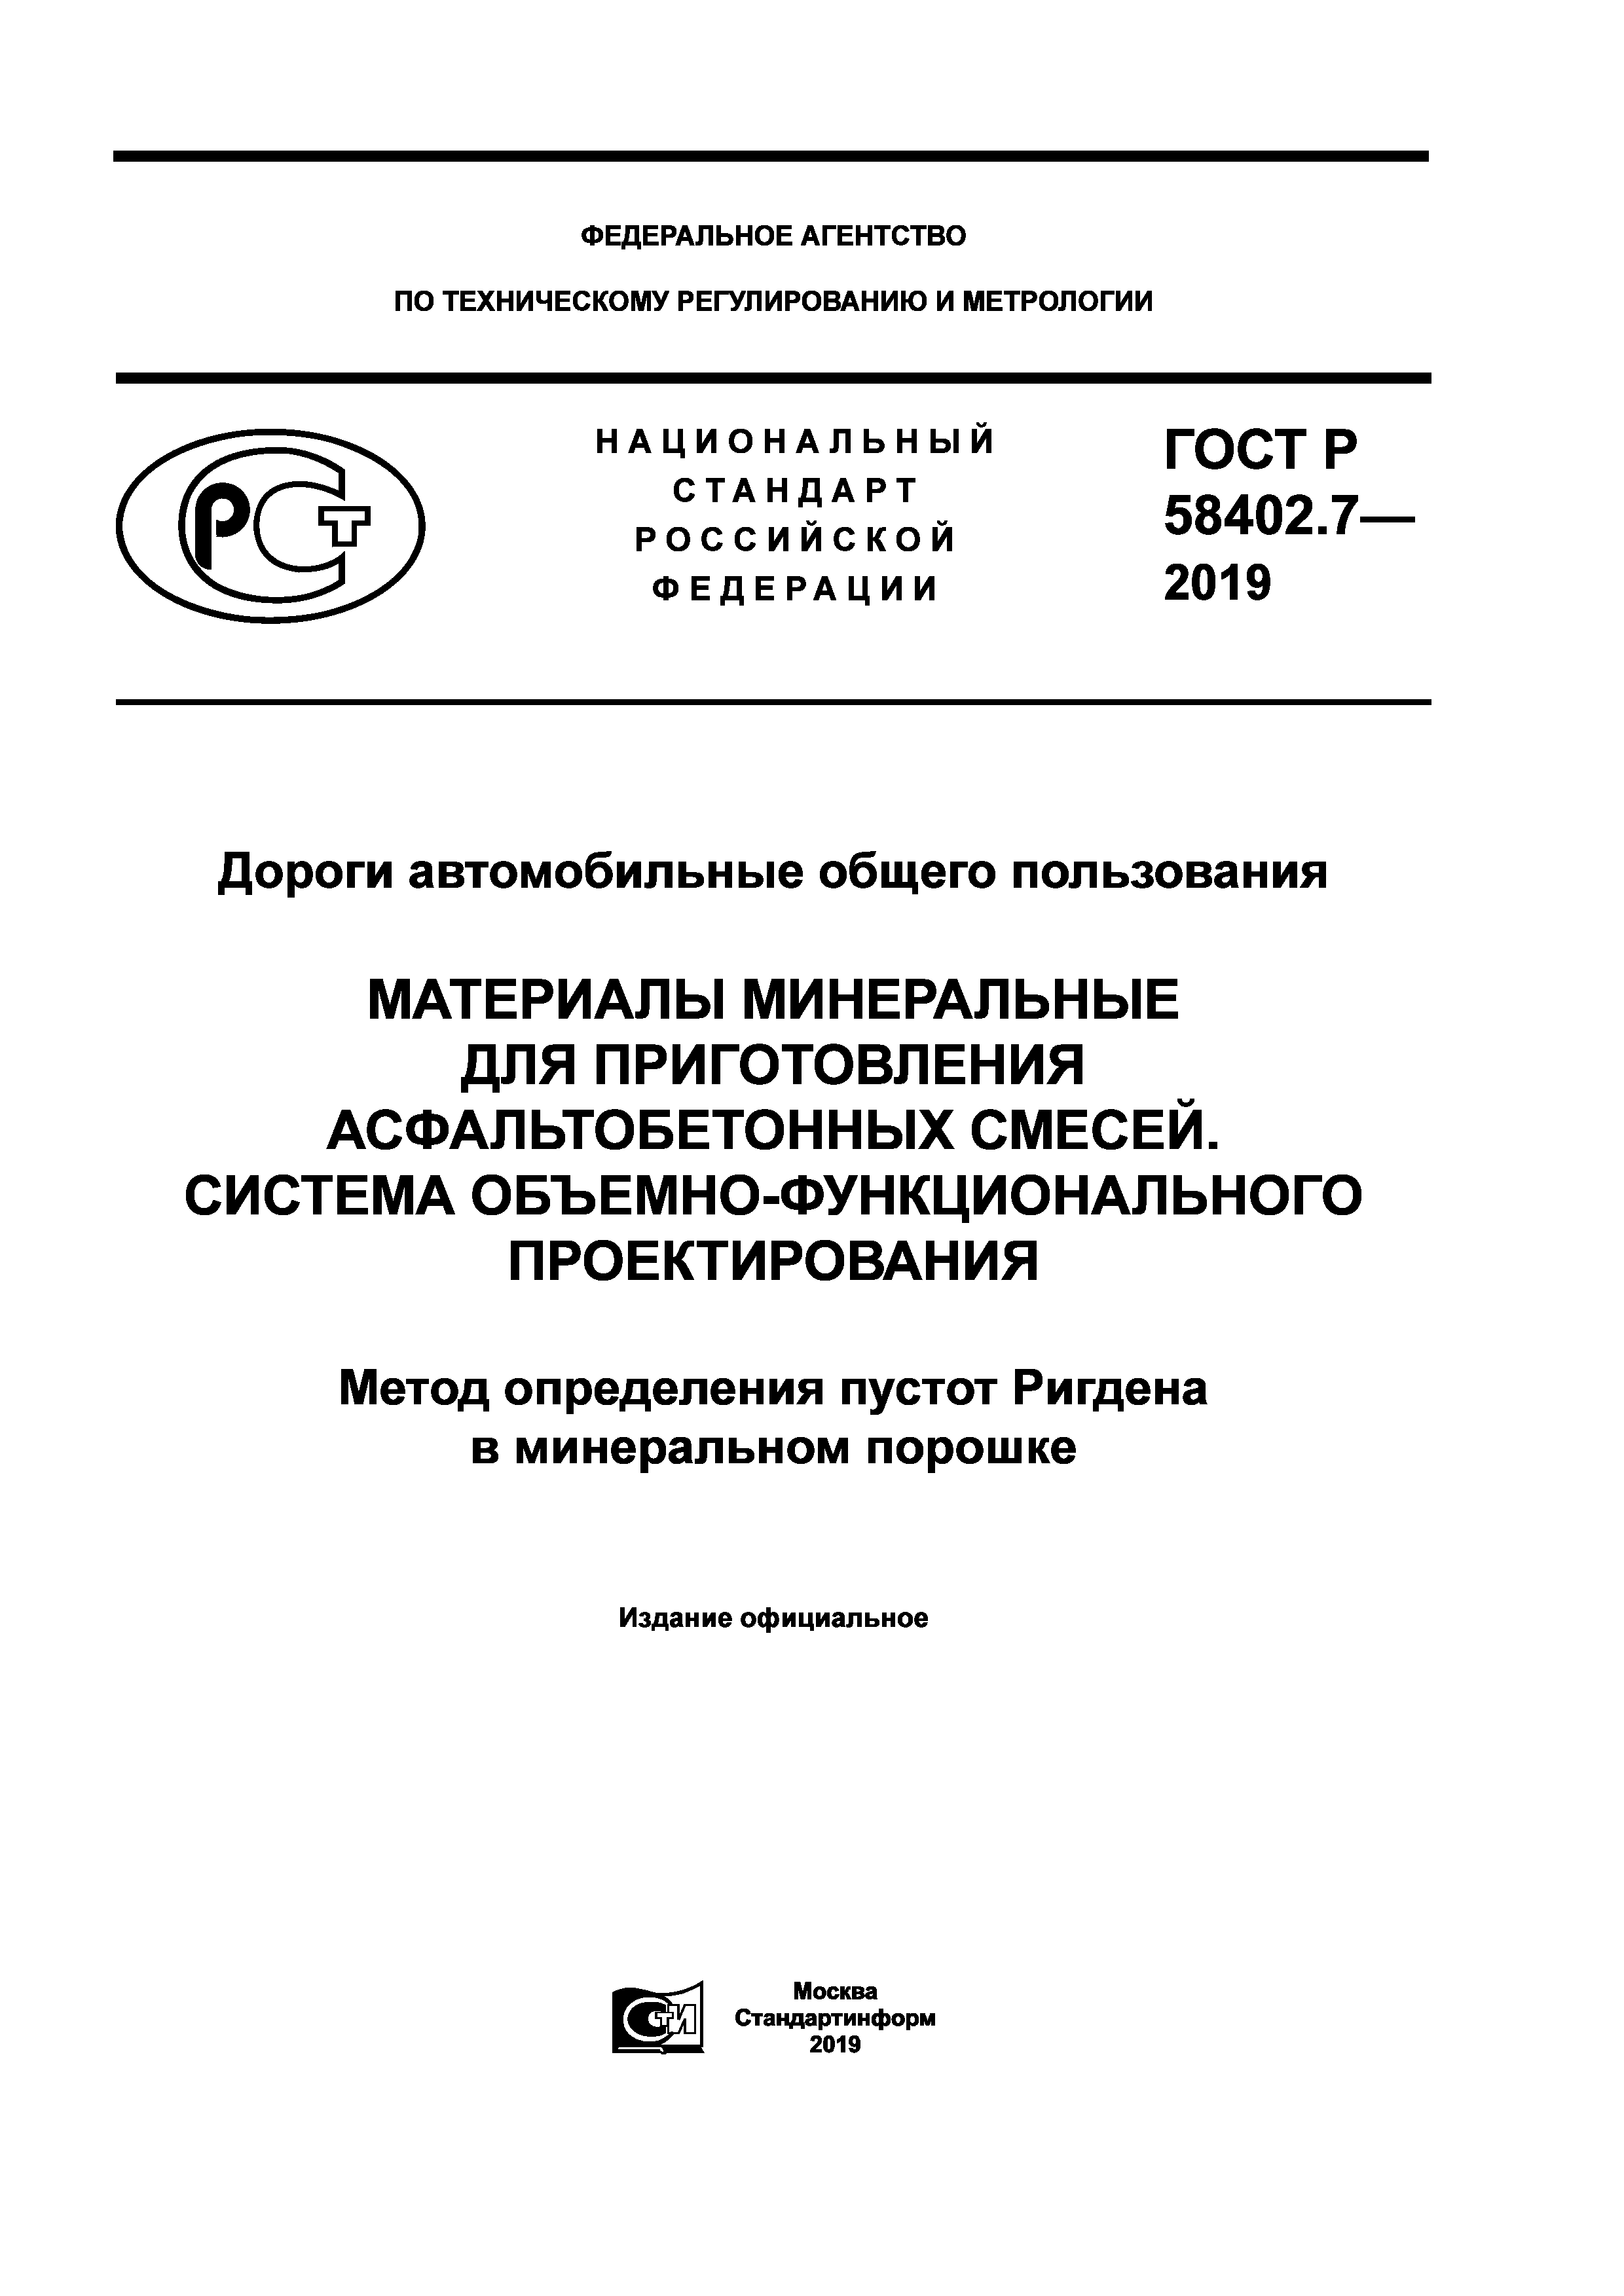 ГОСТ Р 58402.7-2019